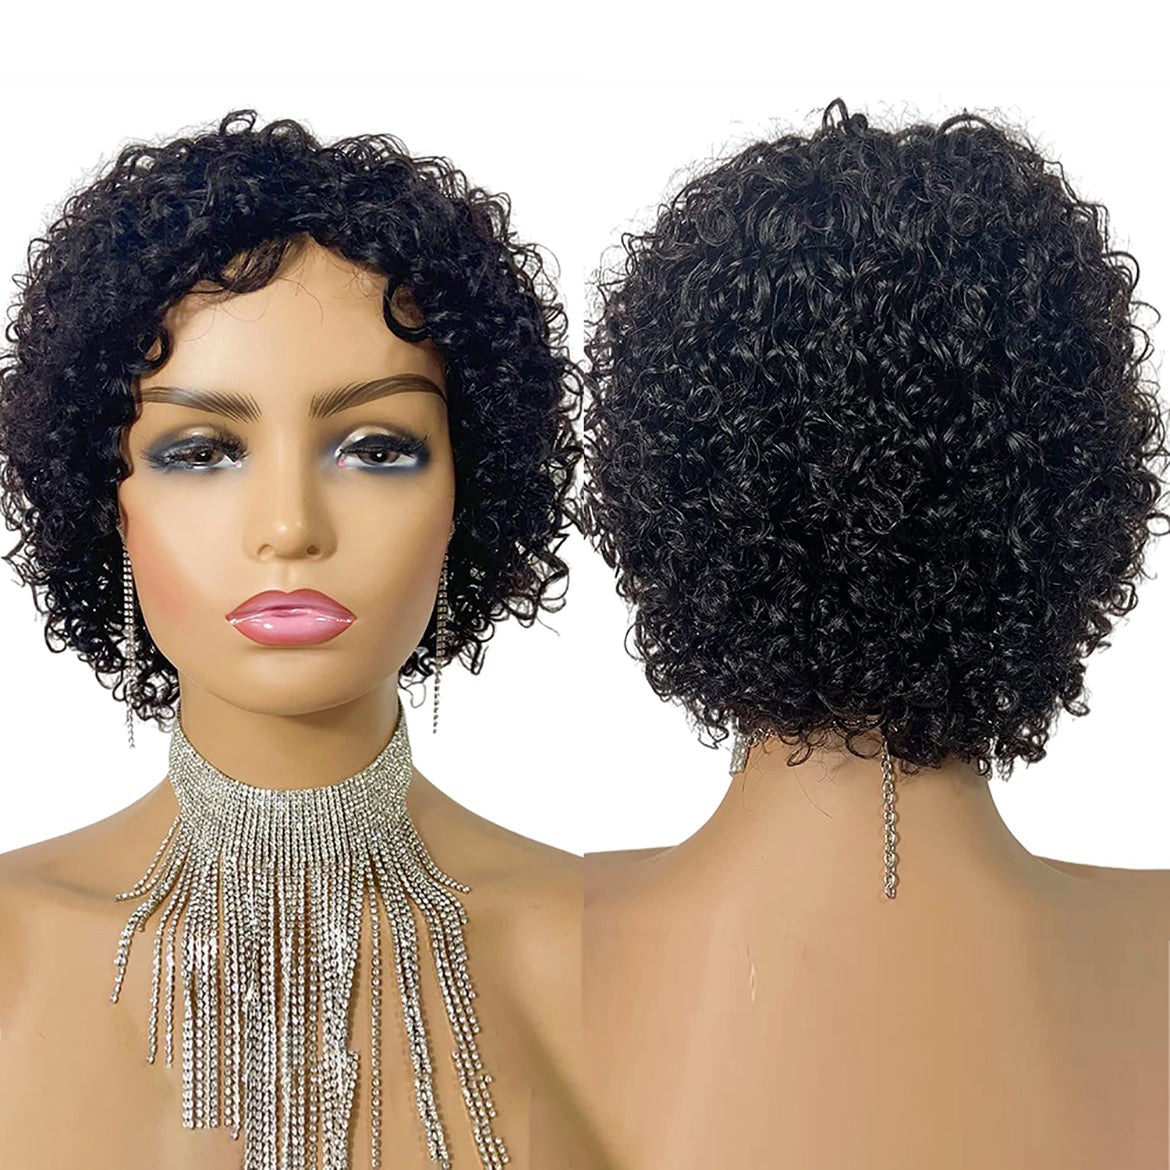 VRBest Curly Pixie Cut Short Lace Front Wigs